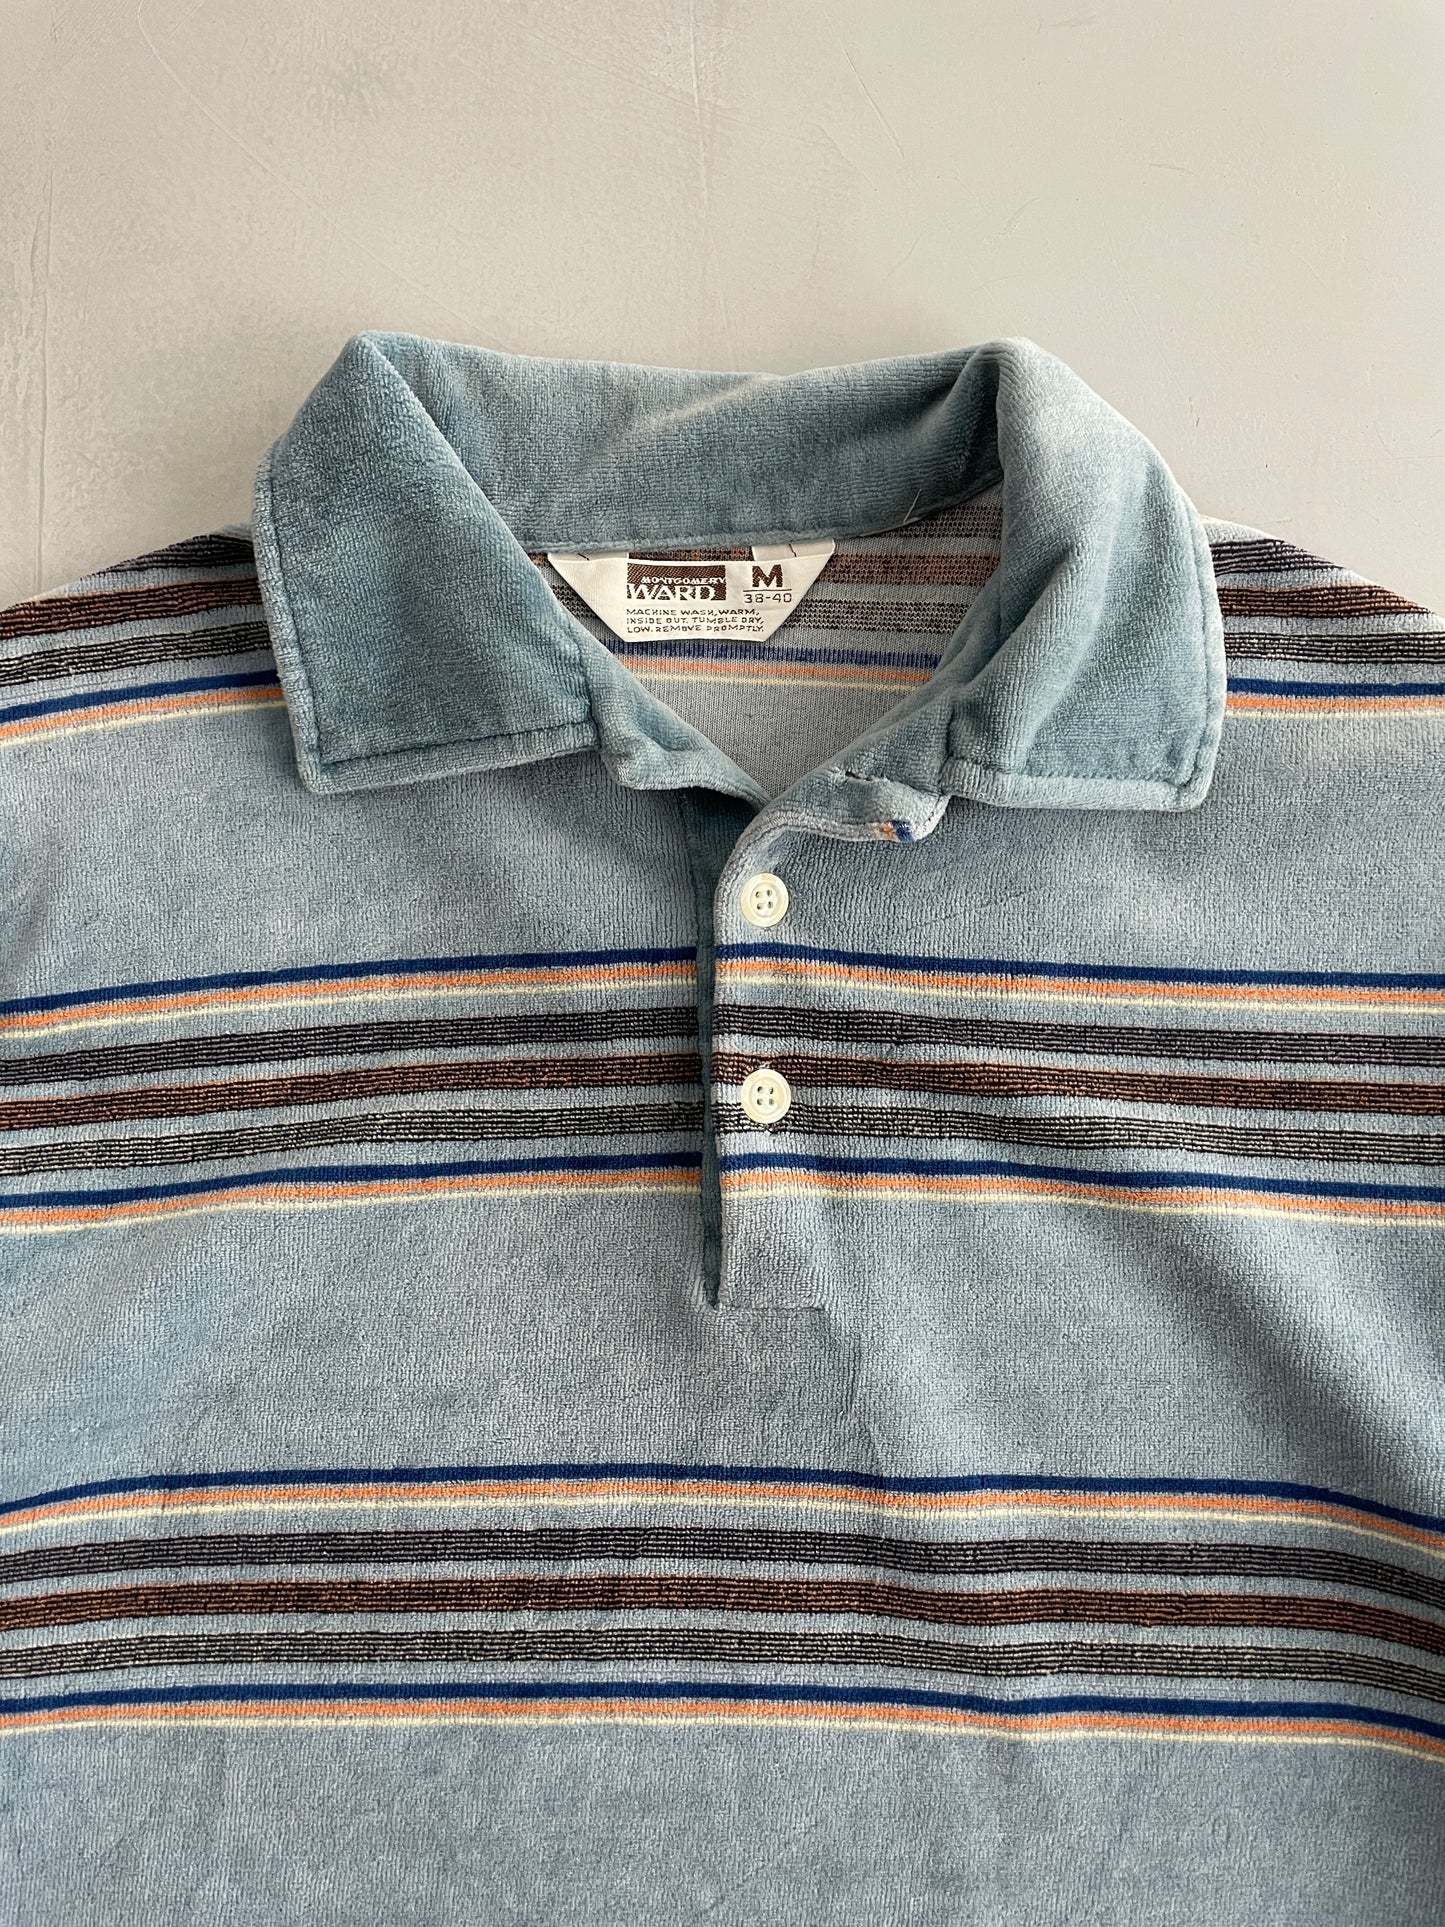 70's Montgomery Ward Shirt [M]